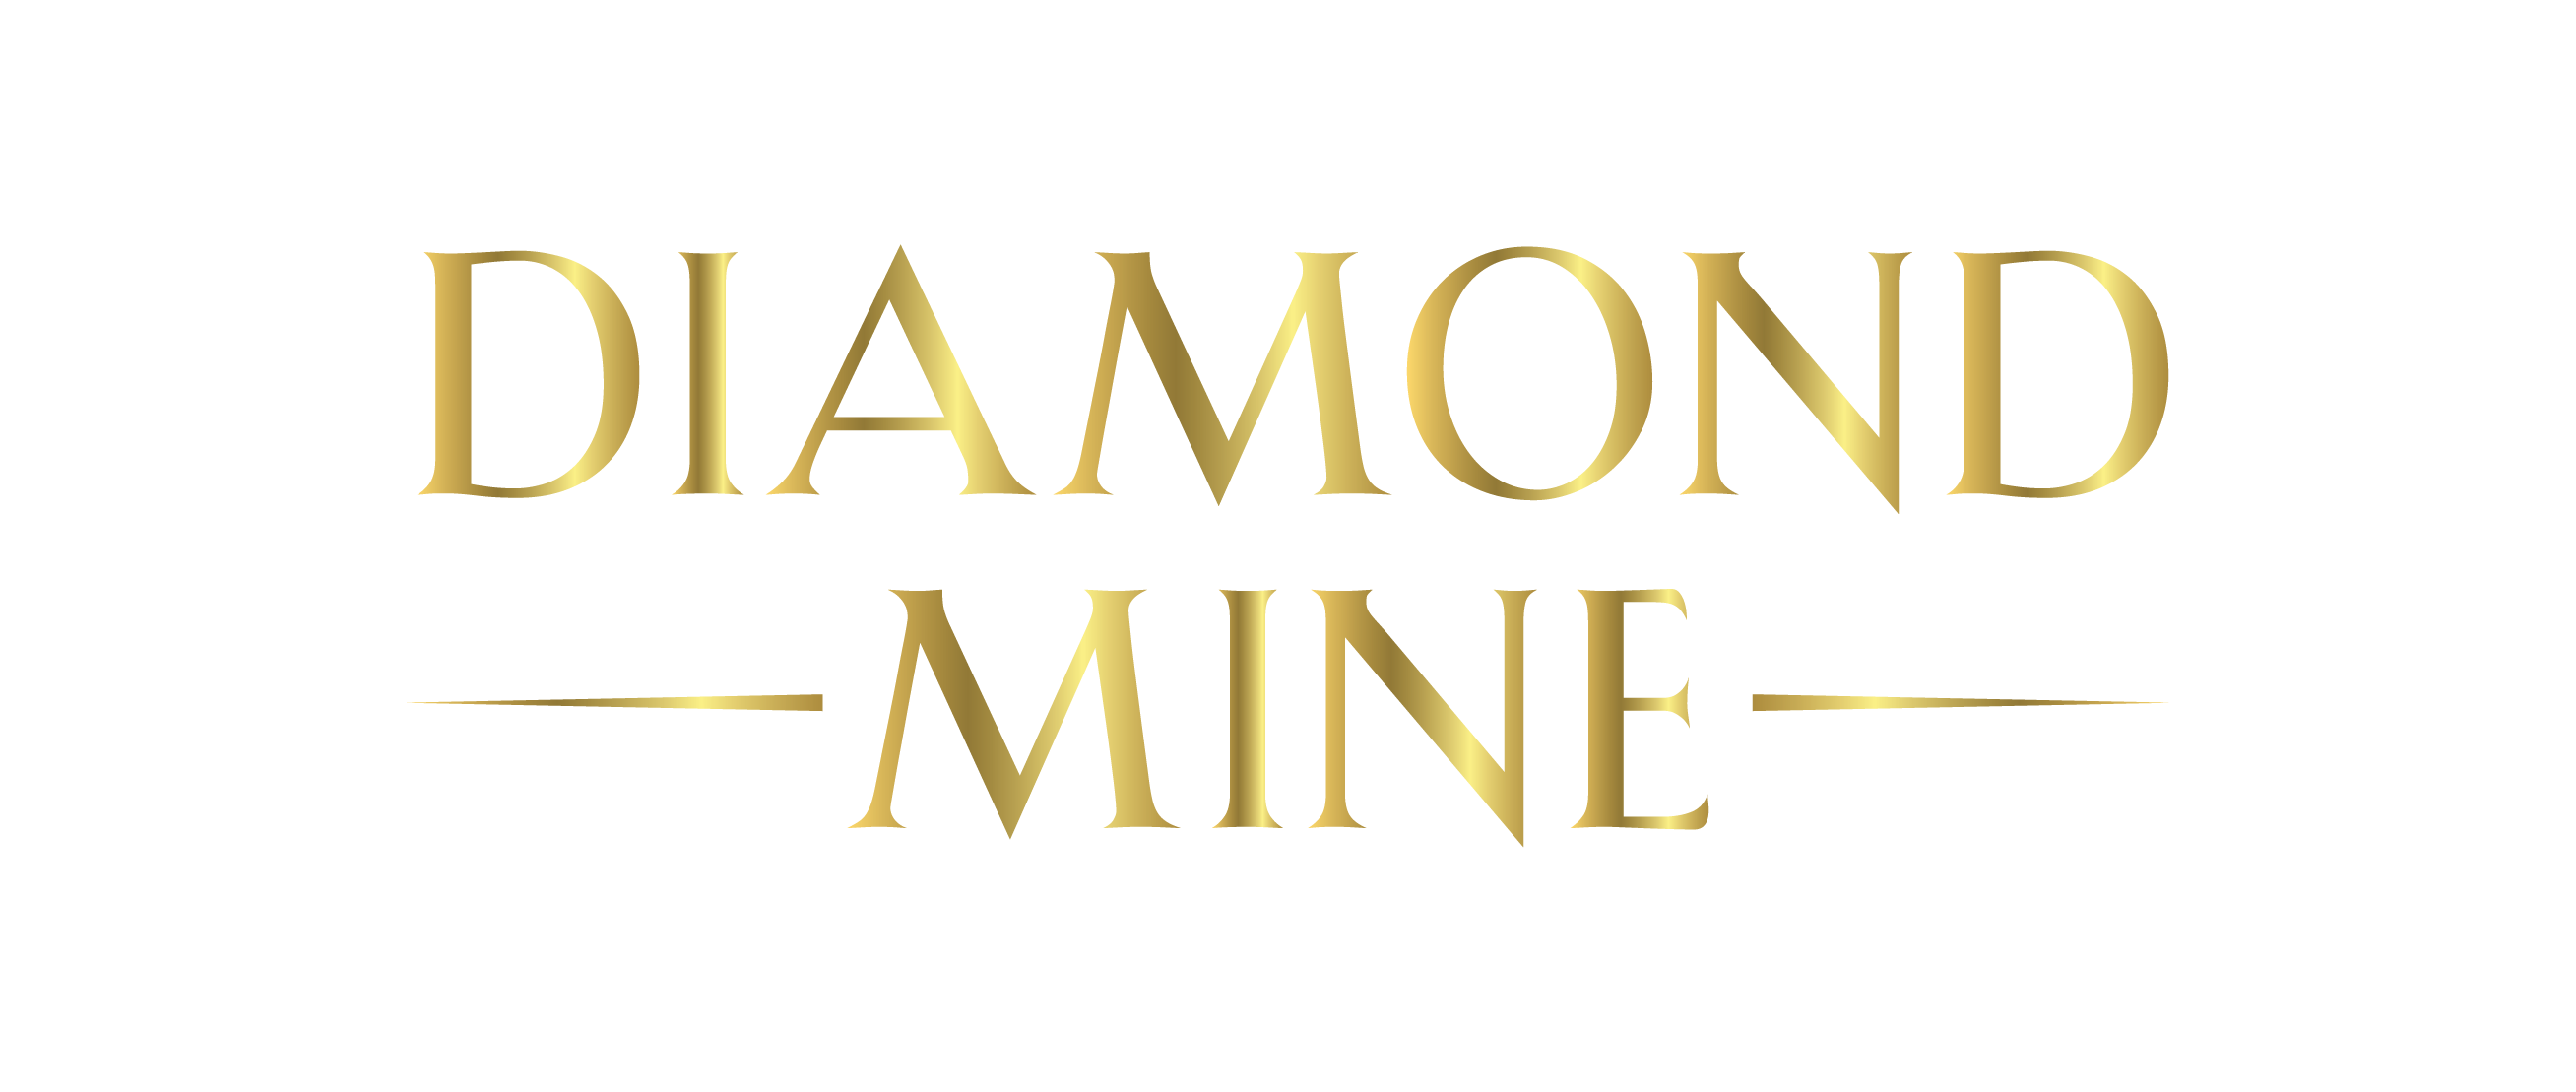 Diamond Mine logo